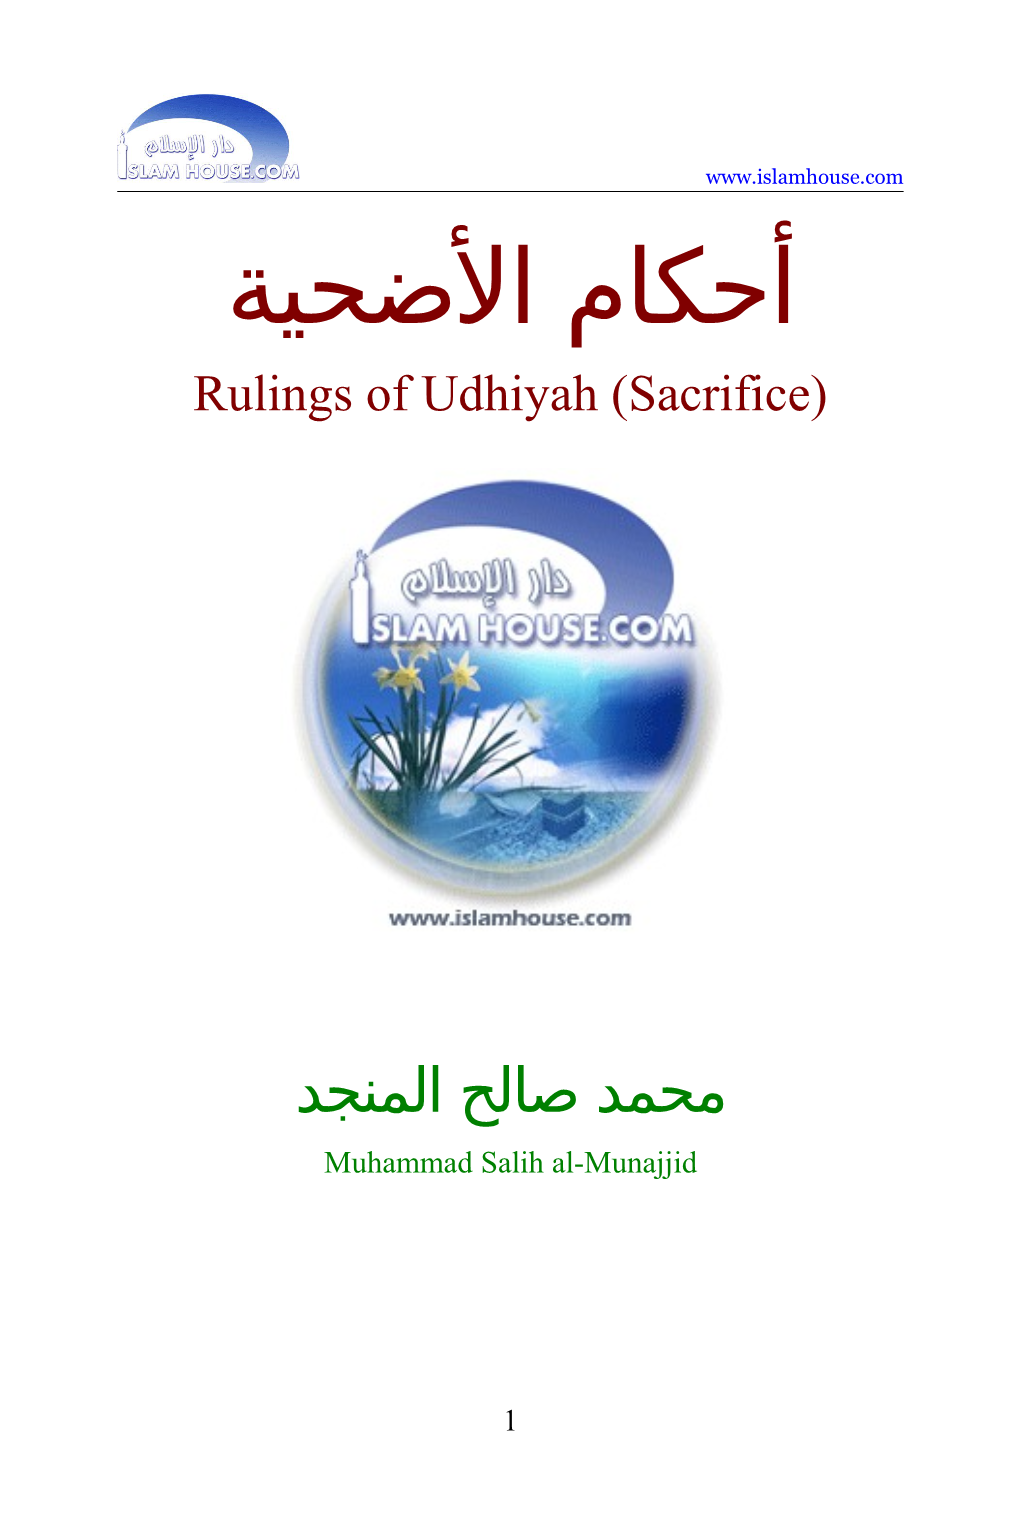 Rulings of Udhiyah (Sacrifice)